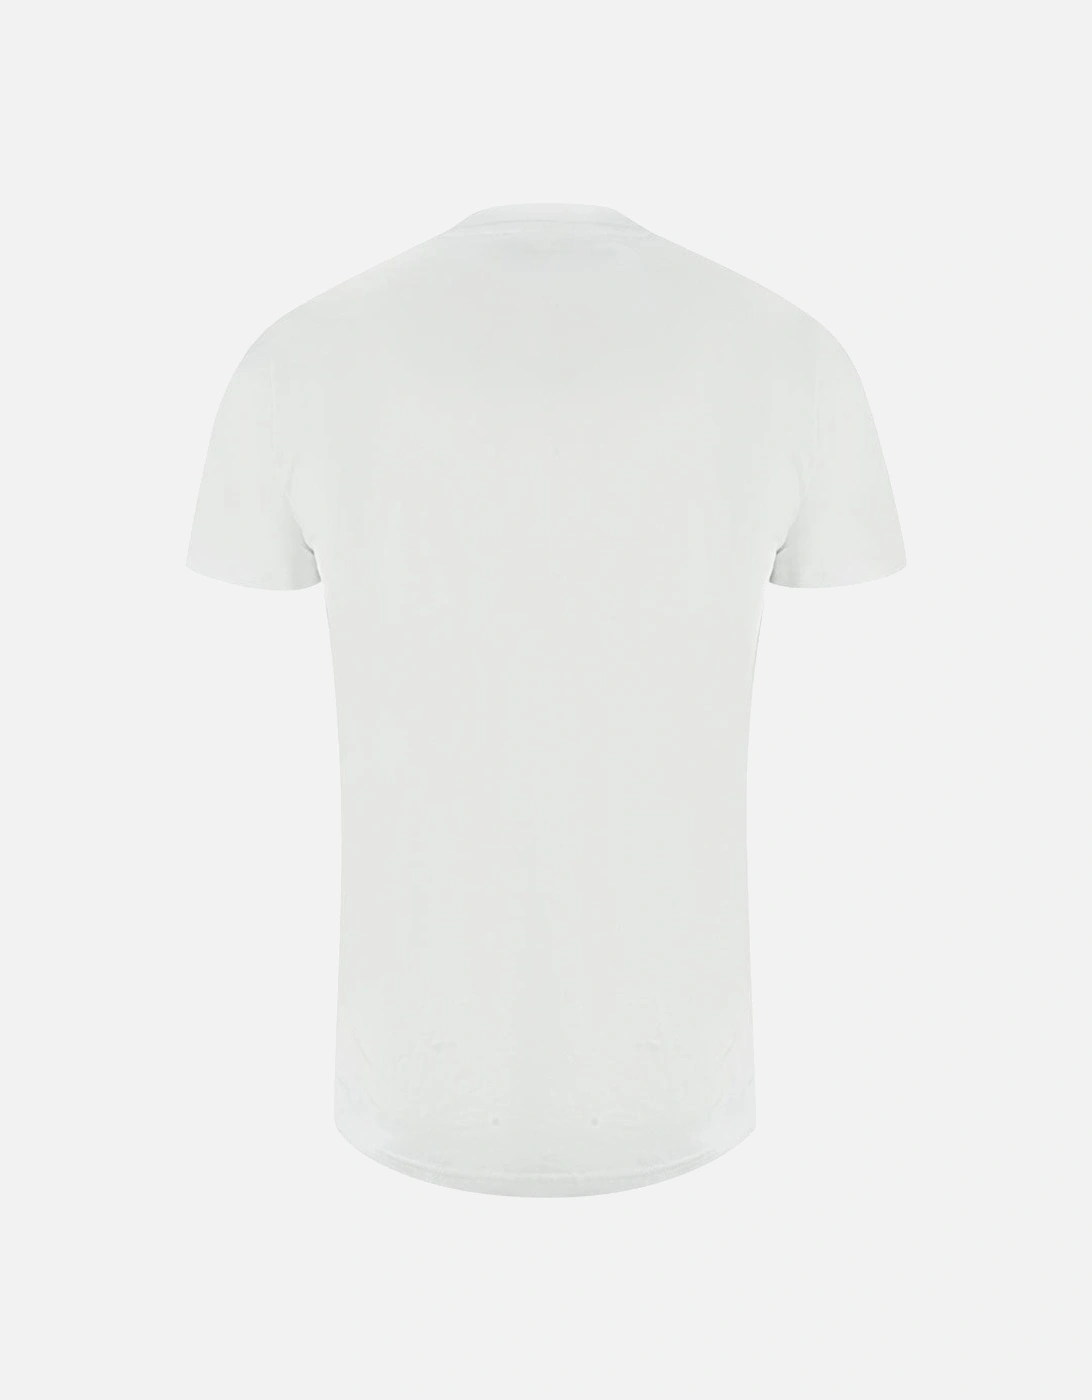 London 1851 White T-Shirt